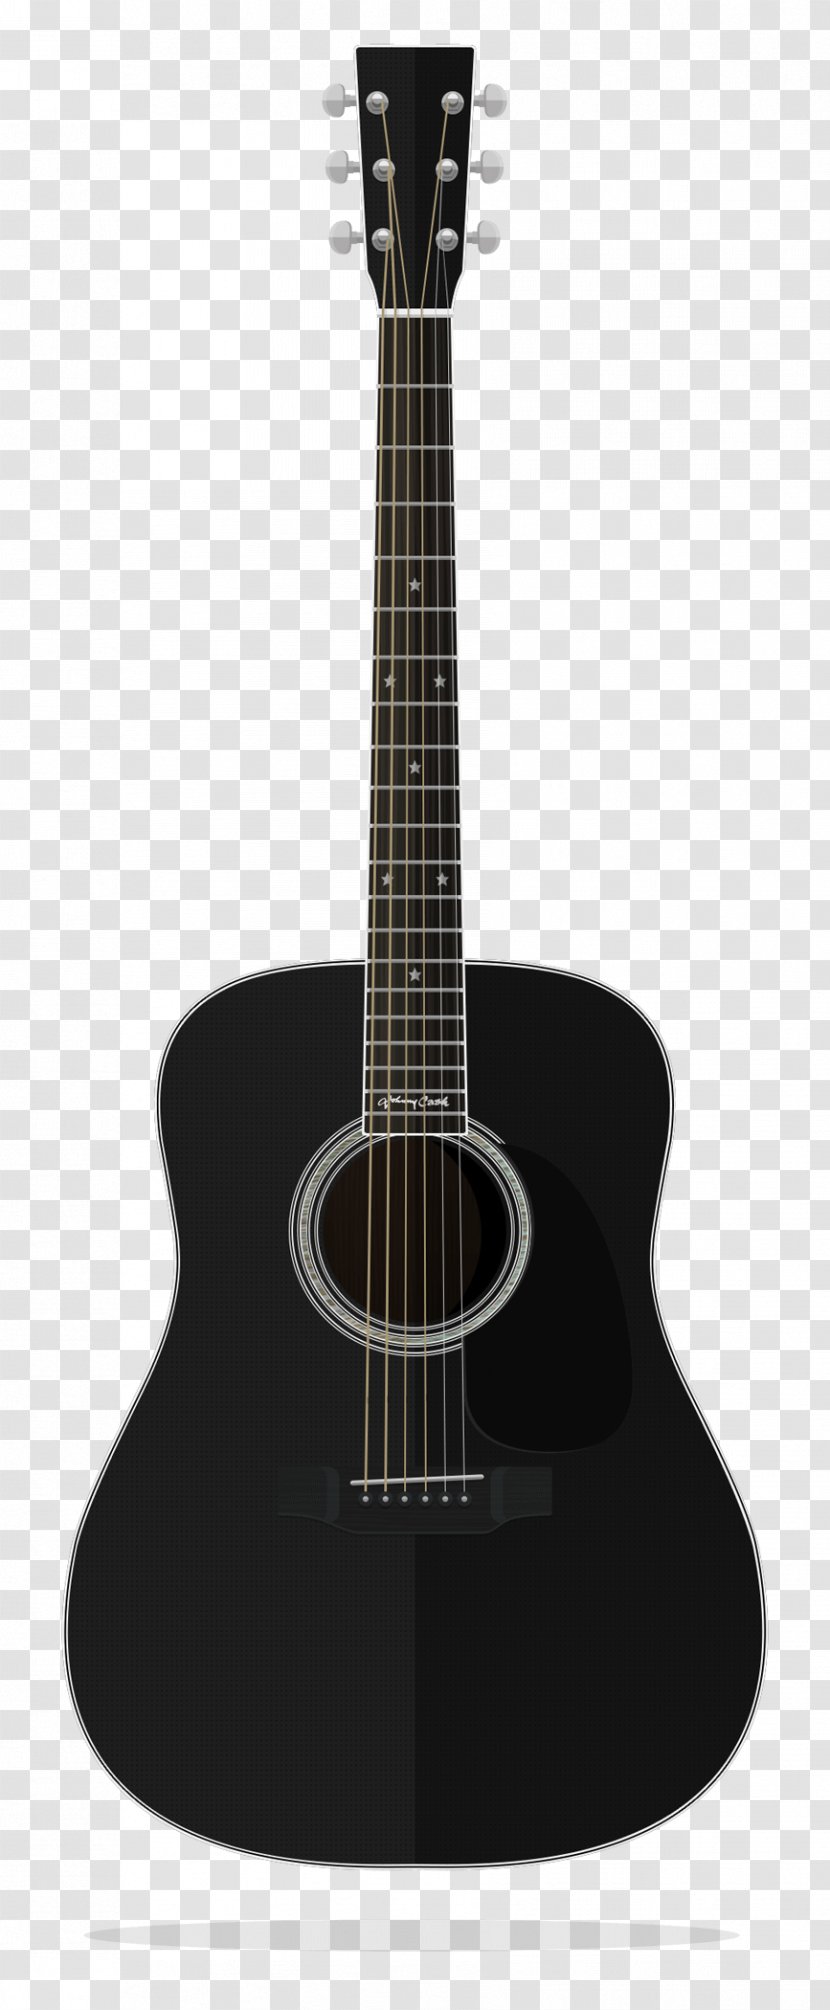 Fender Stratocaster Acoustic Guitar Dreadnought String - Heart - Johnny Cash Transparent PNG